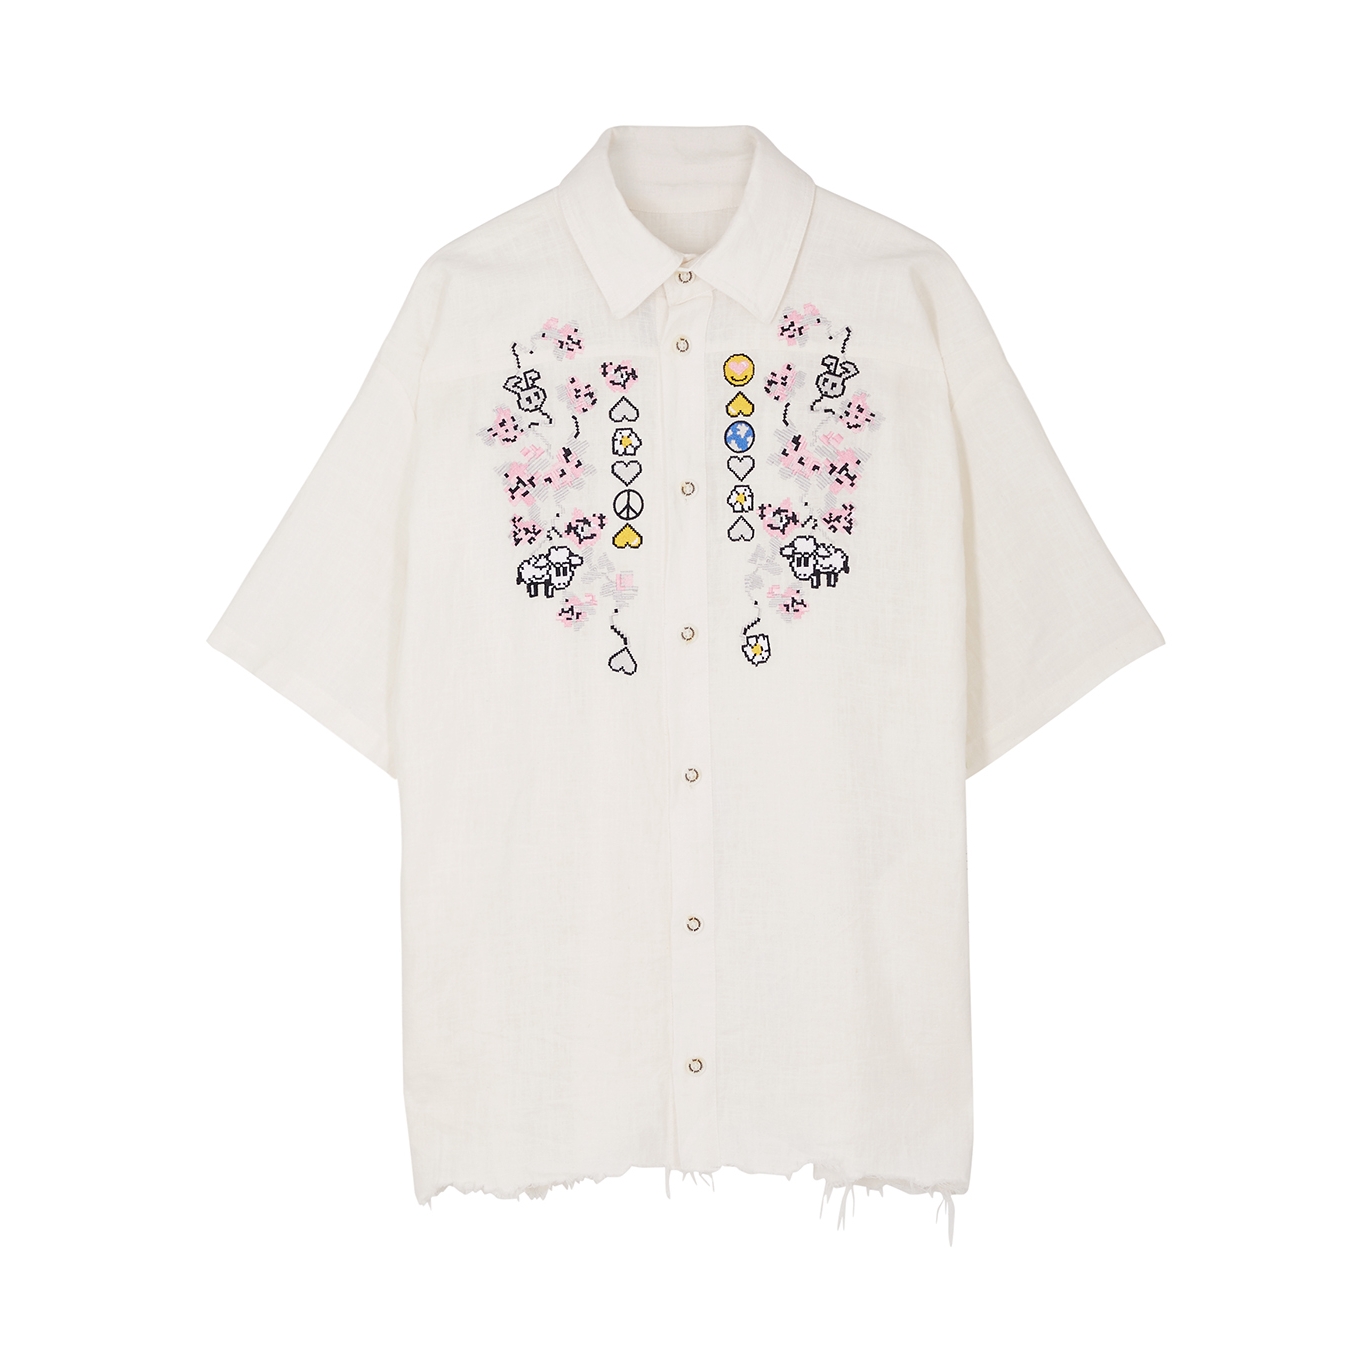 Natasha Zinko Embroidered Frayed Woven Shirt - White - M